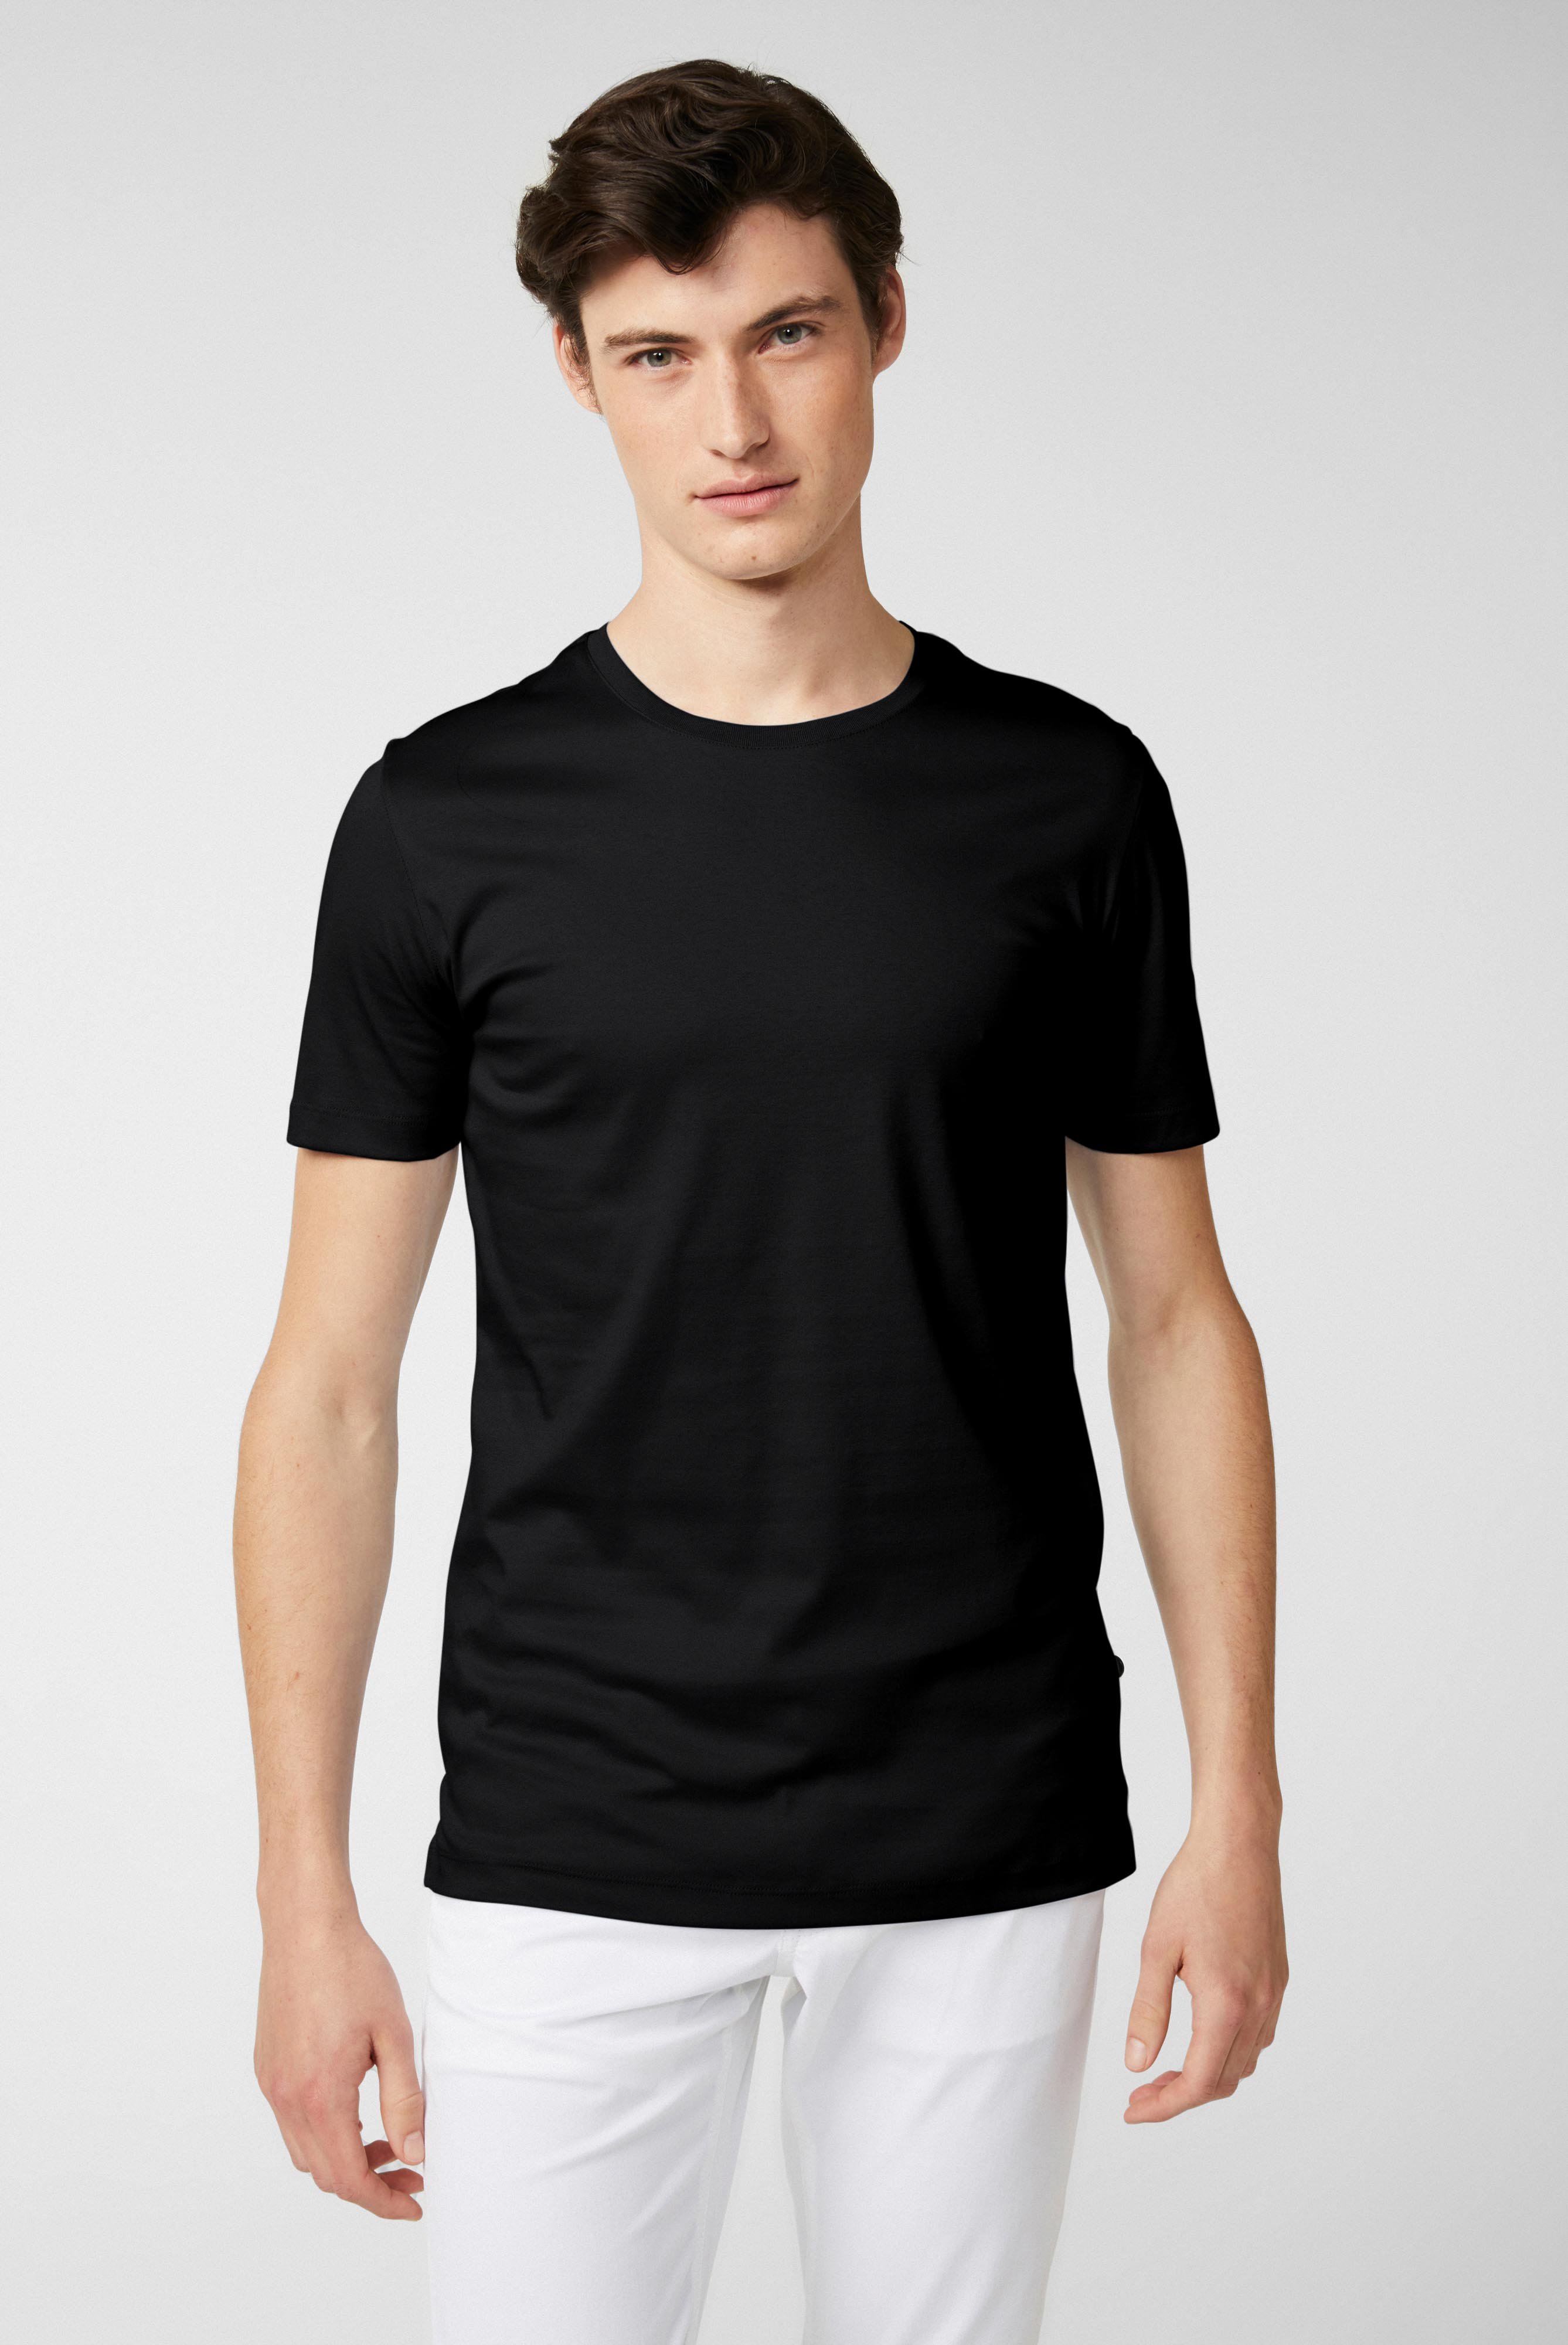 T-Shirts+Rundhals Jersey T-Shirt Slim Fit+20.1717.UX.180031.099.XXL